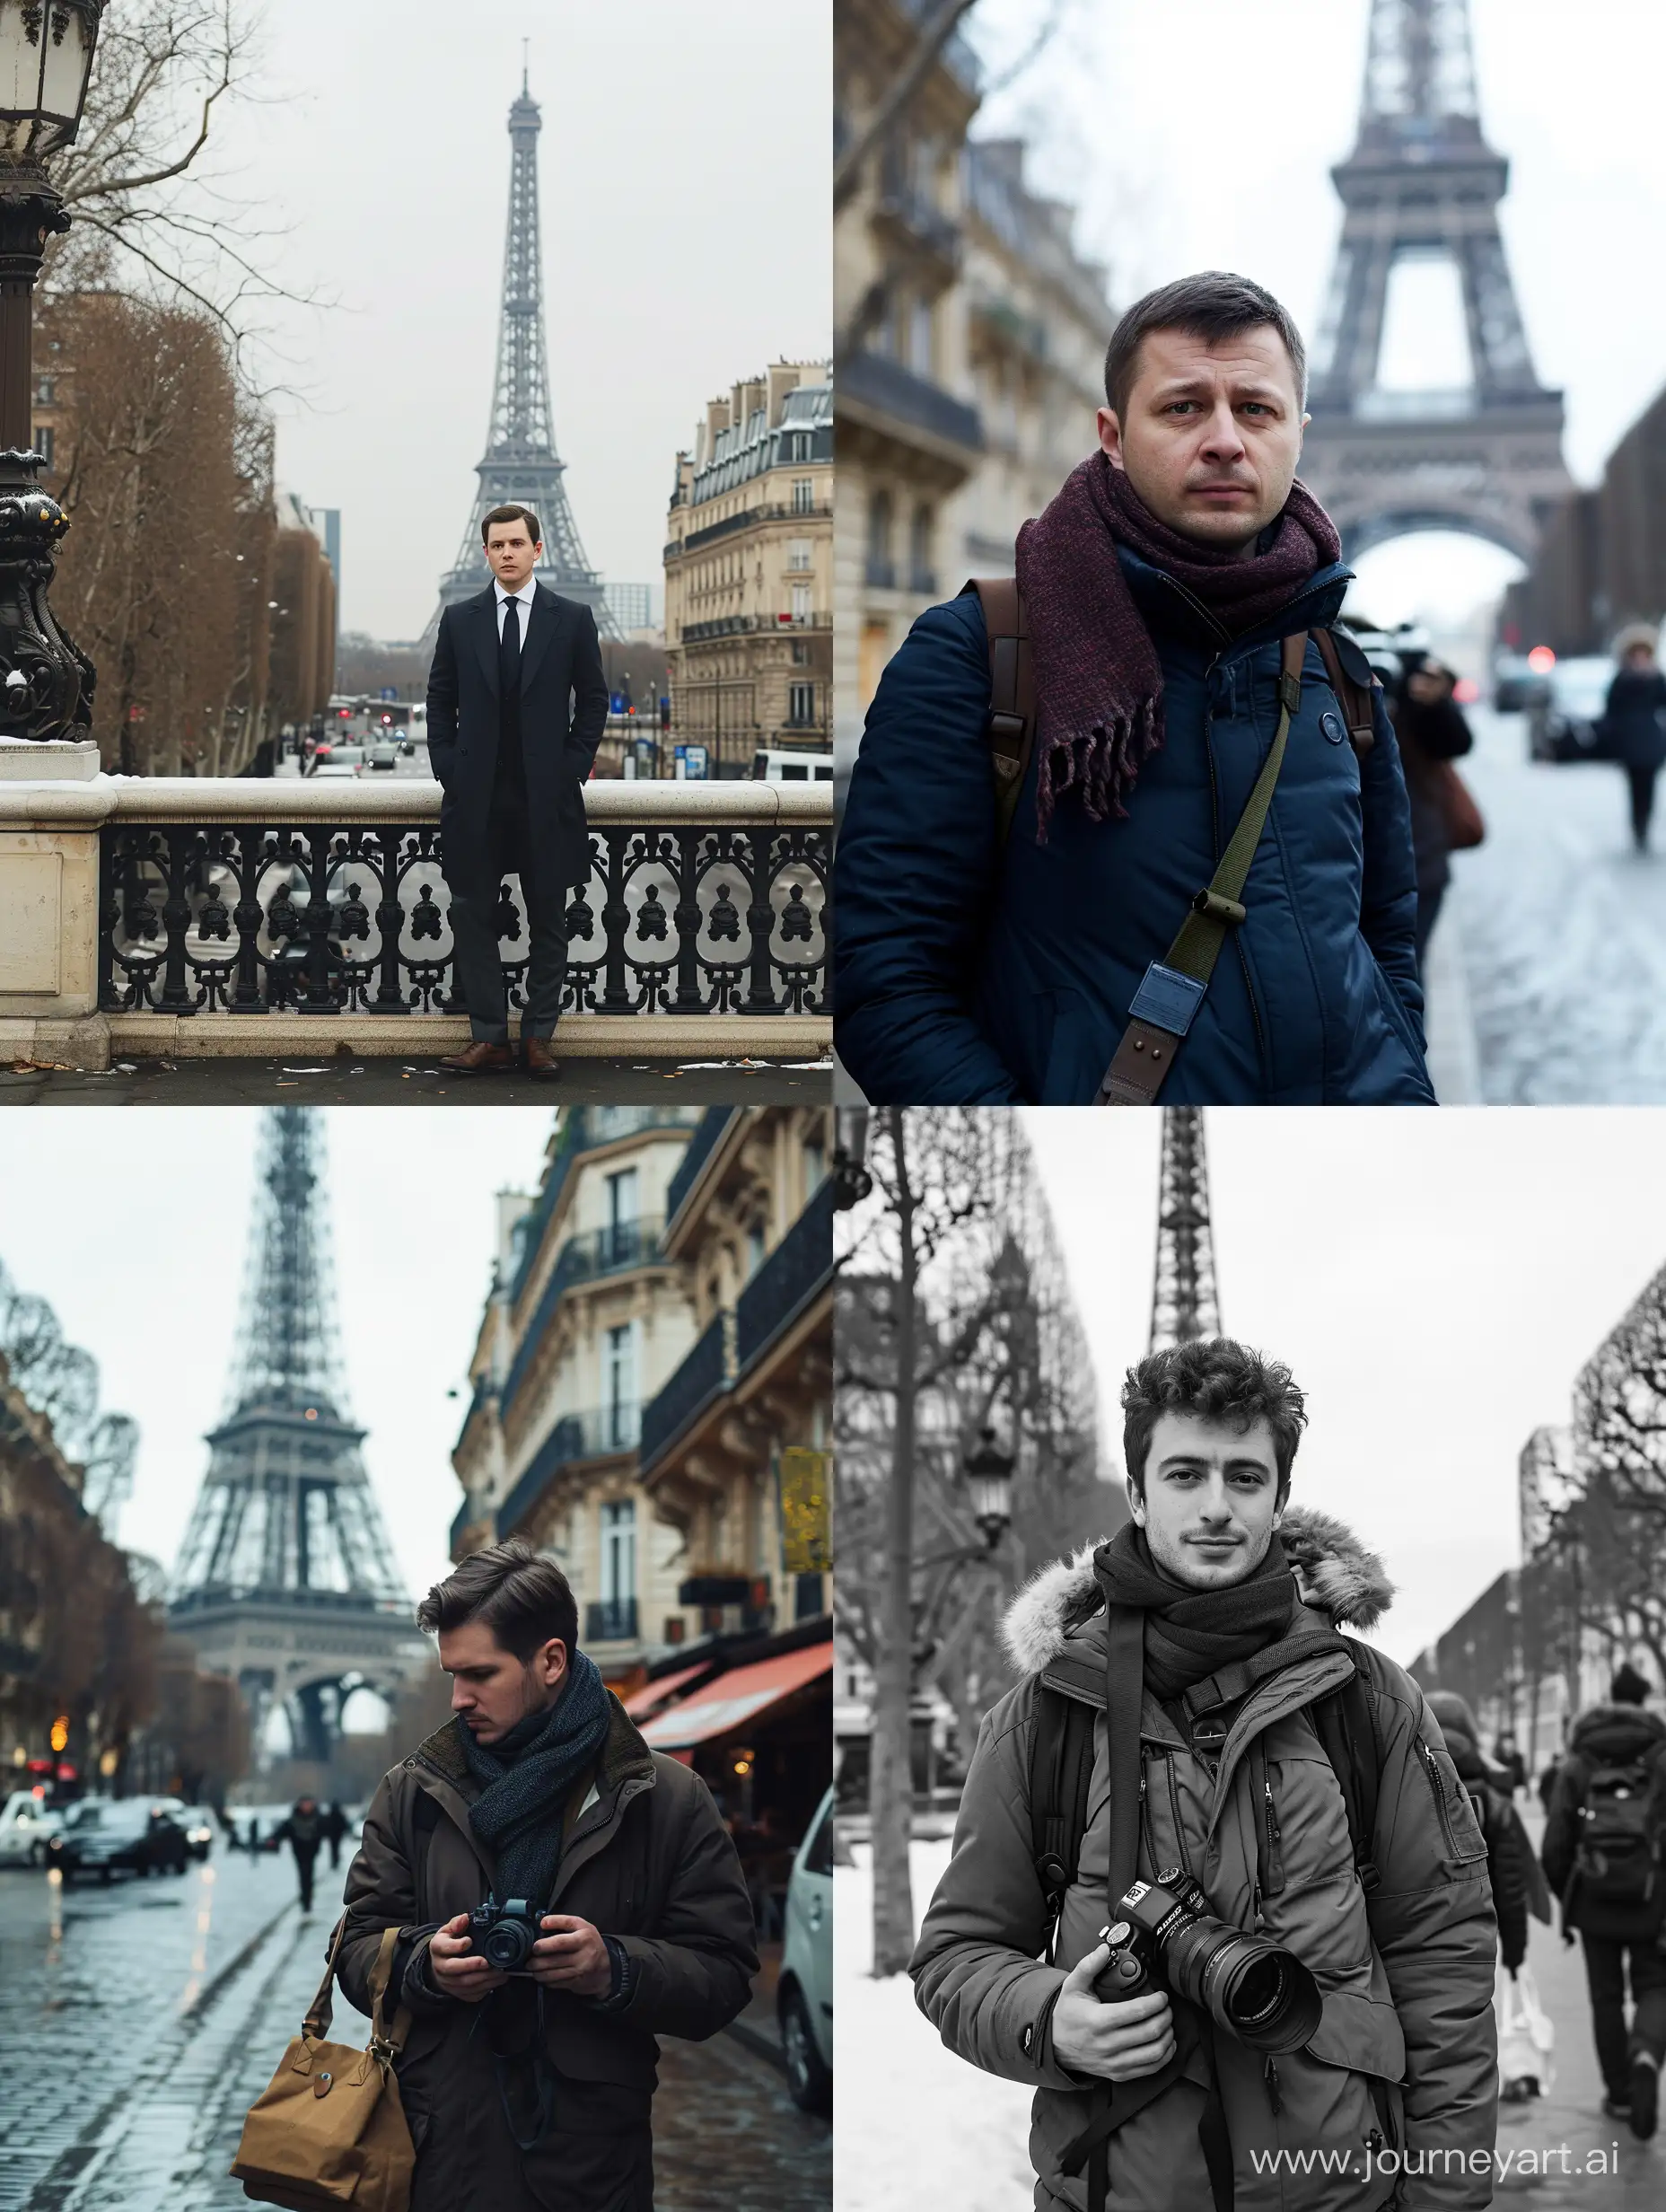 Journalist-Roman-Pyatakov-Captures-Paris-Essence-in-64-Aspect-Ratio-Photo-59639